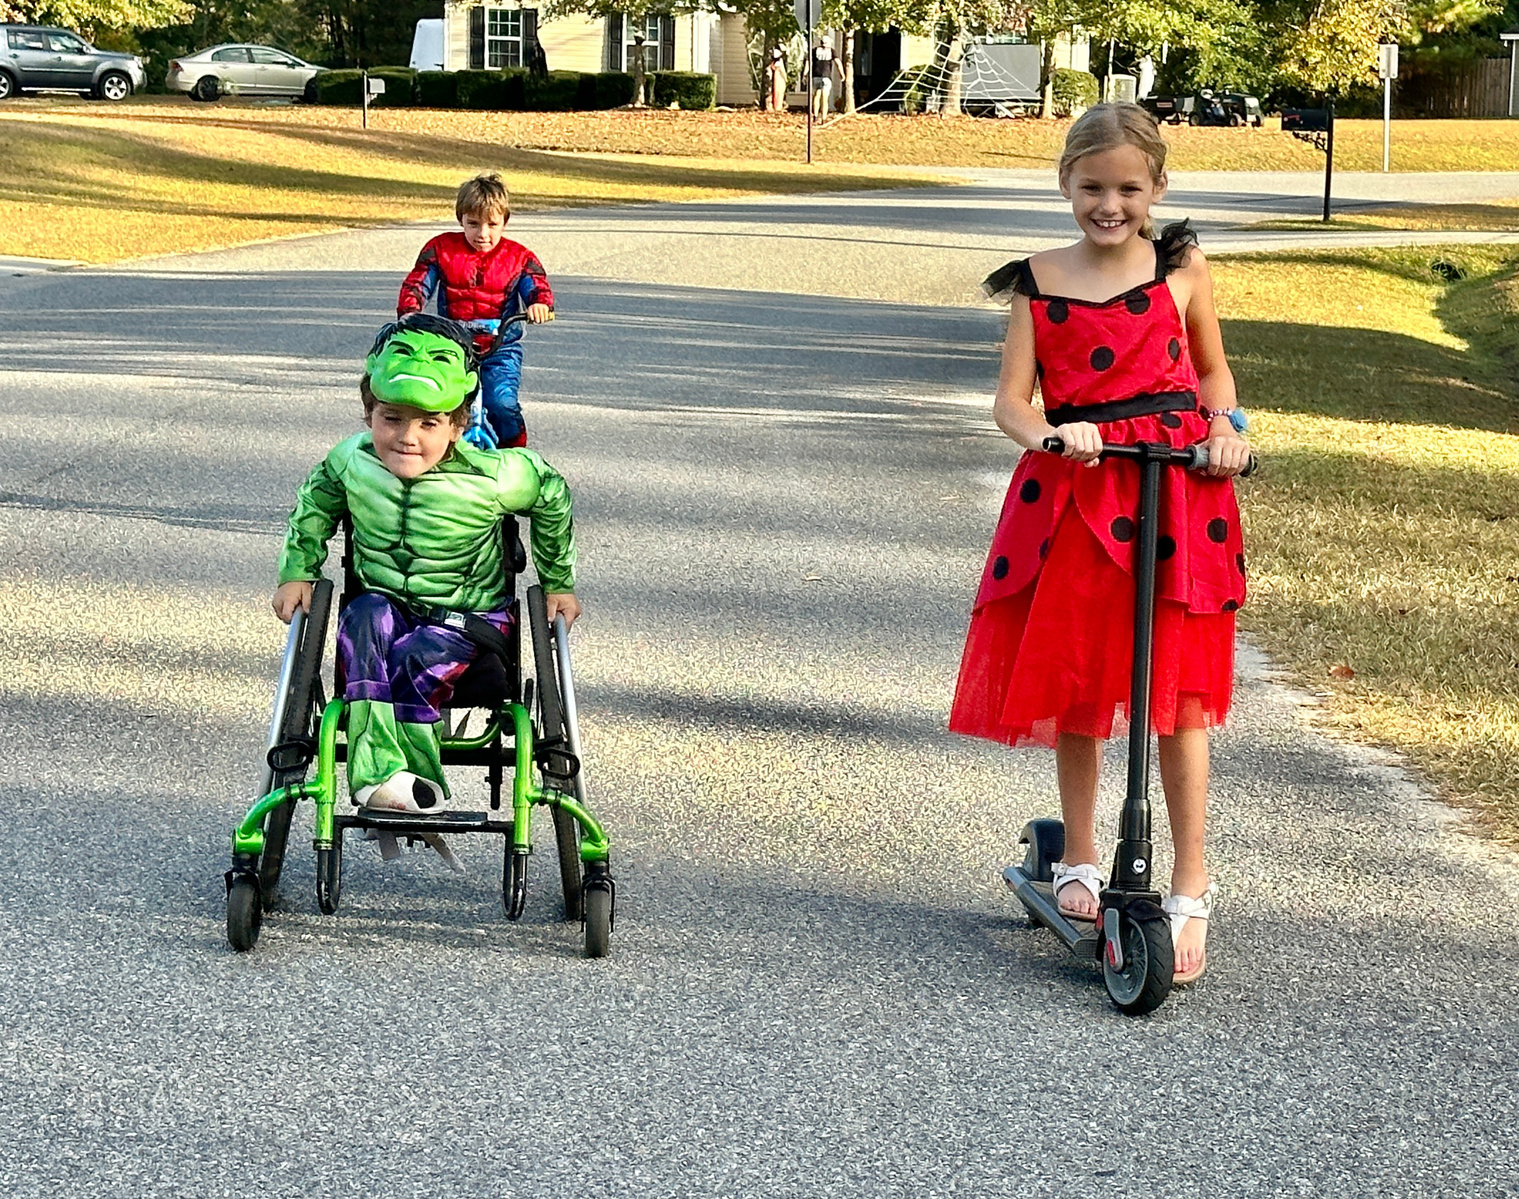 Three children in Halloween costumes go down a street. 